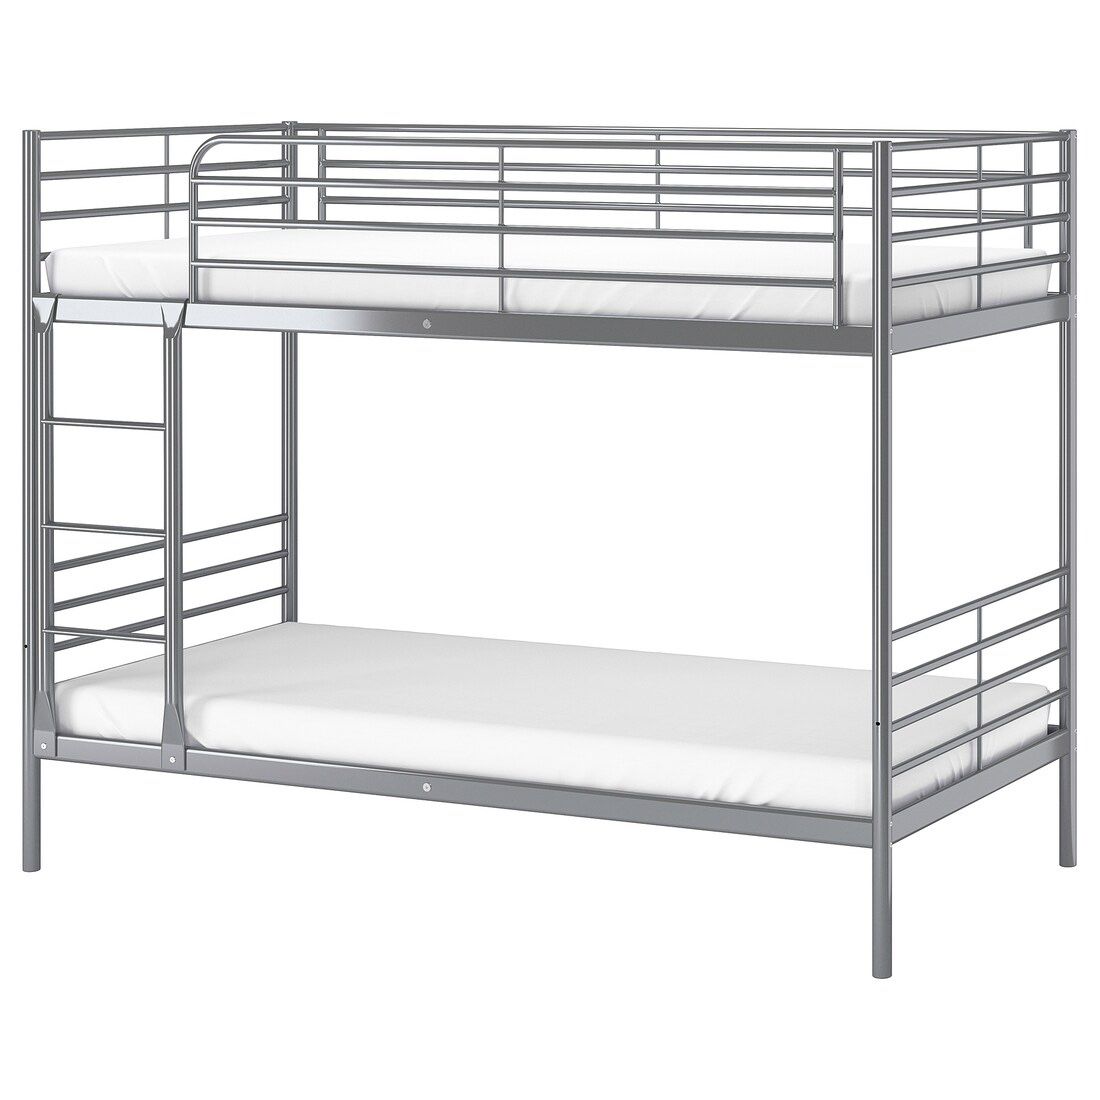 IKEA SVARTA Bunk Bed Frame Grey/Silver metal